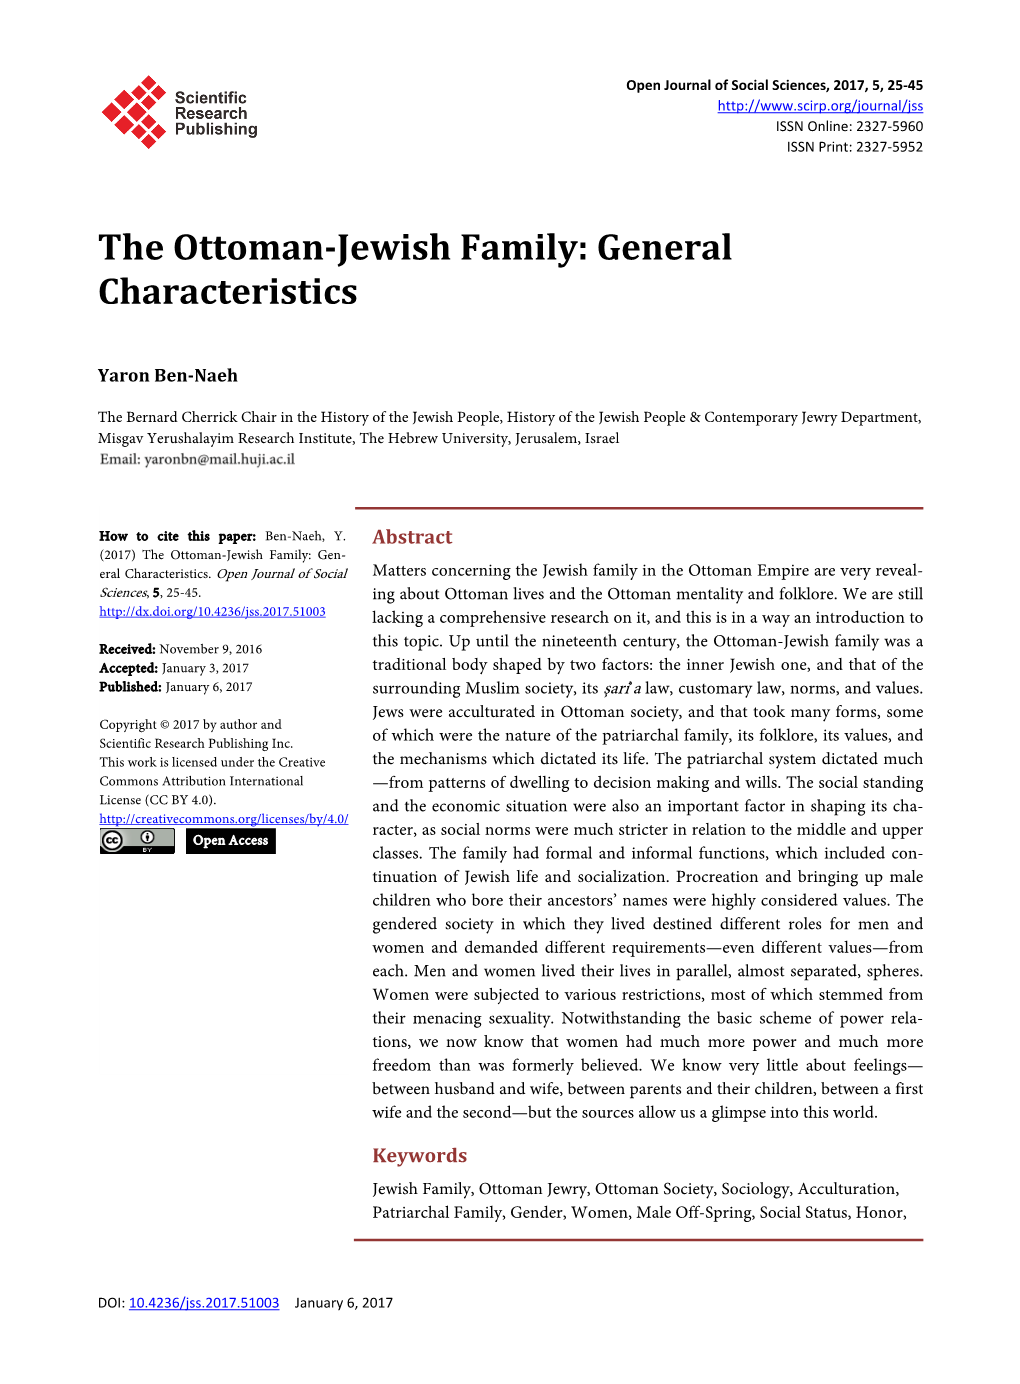 The Ottoman-Jewish Family: General Characteristics